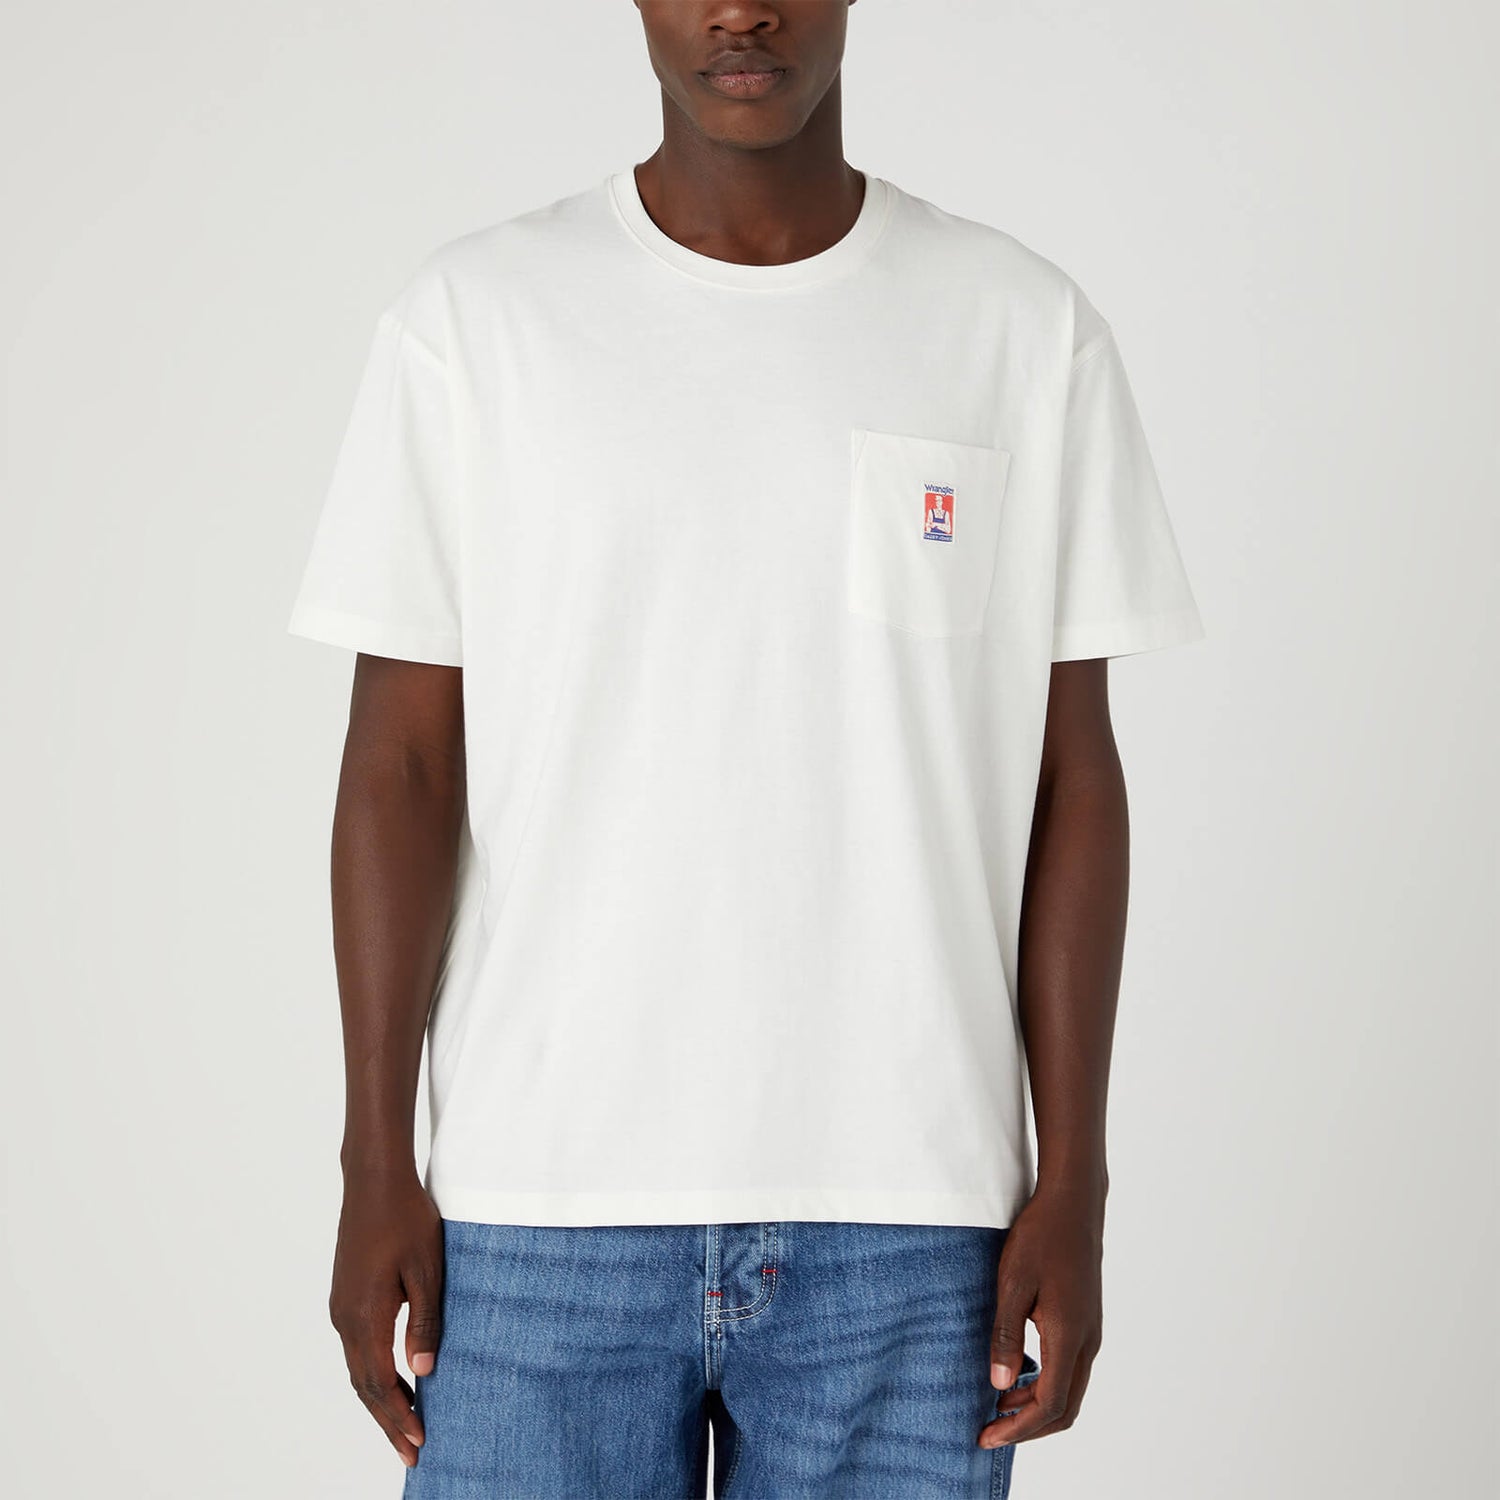 Wrangler Casey Jones Pocket Patch Cotton T-Shirt - S